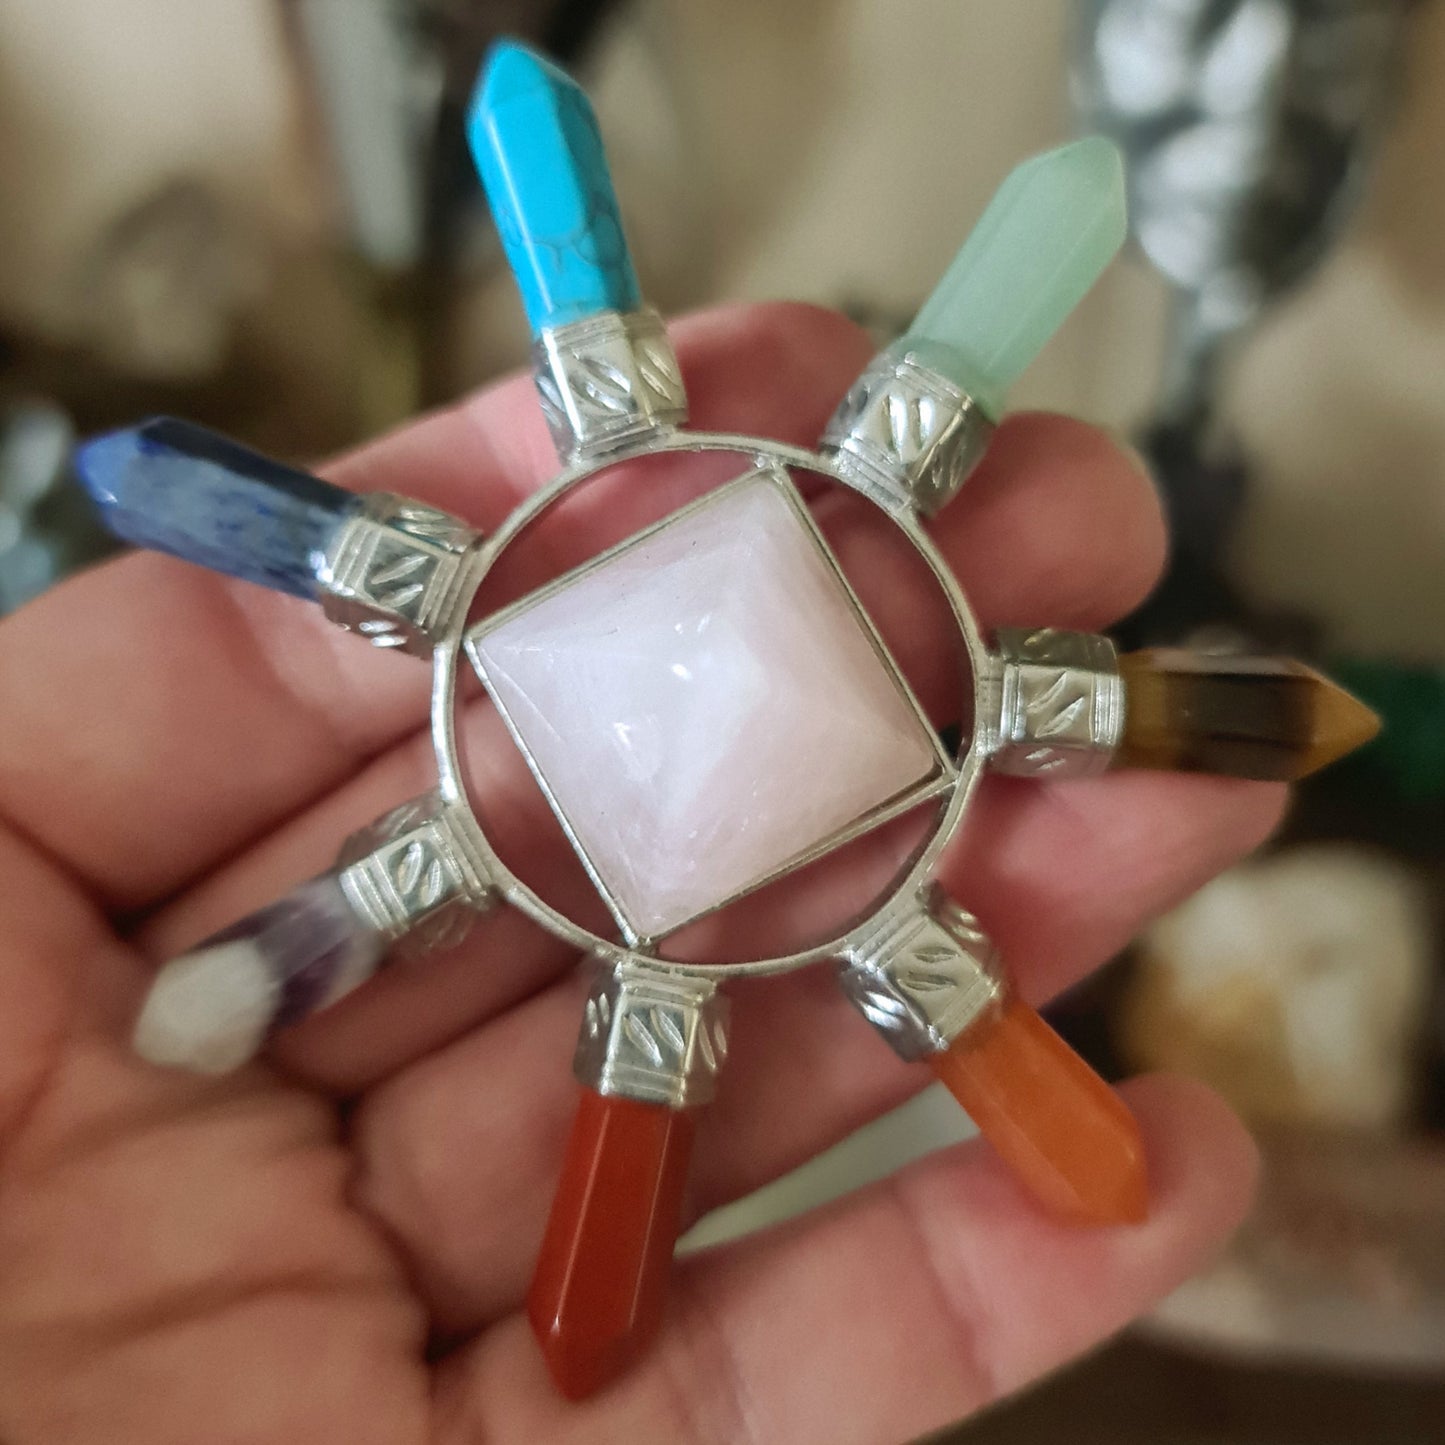 Crystal Chakra Wheel